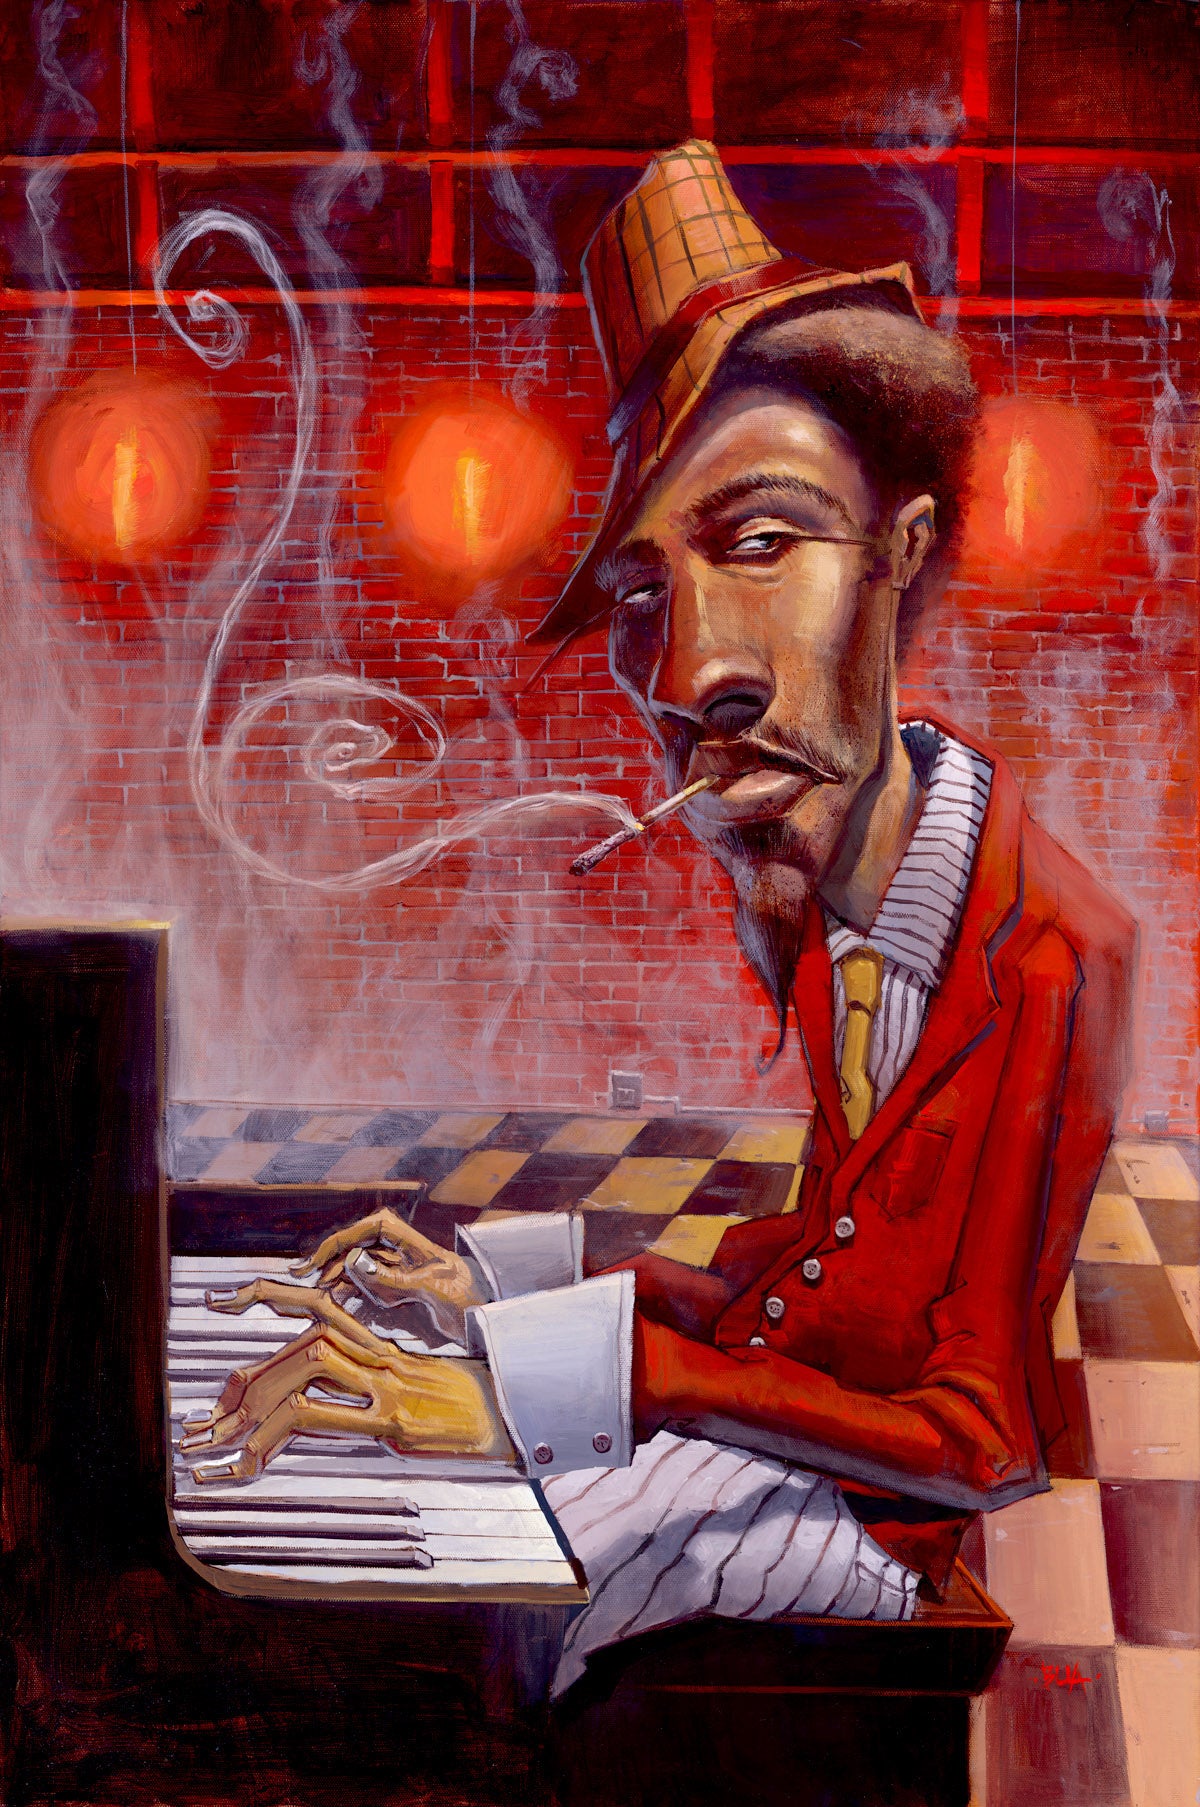 Jazz musician Art Print by contemporary urban artist Justin BUA 